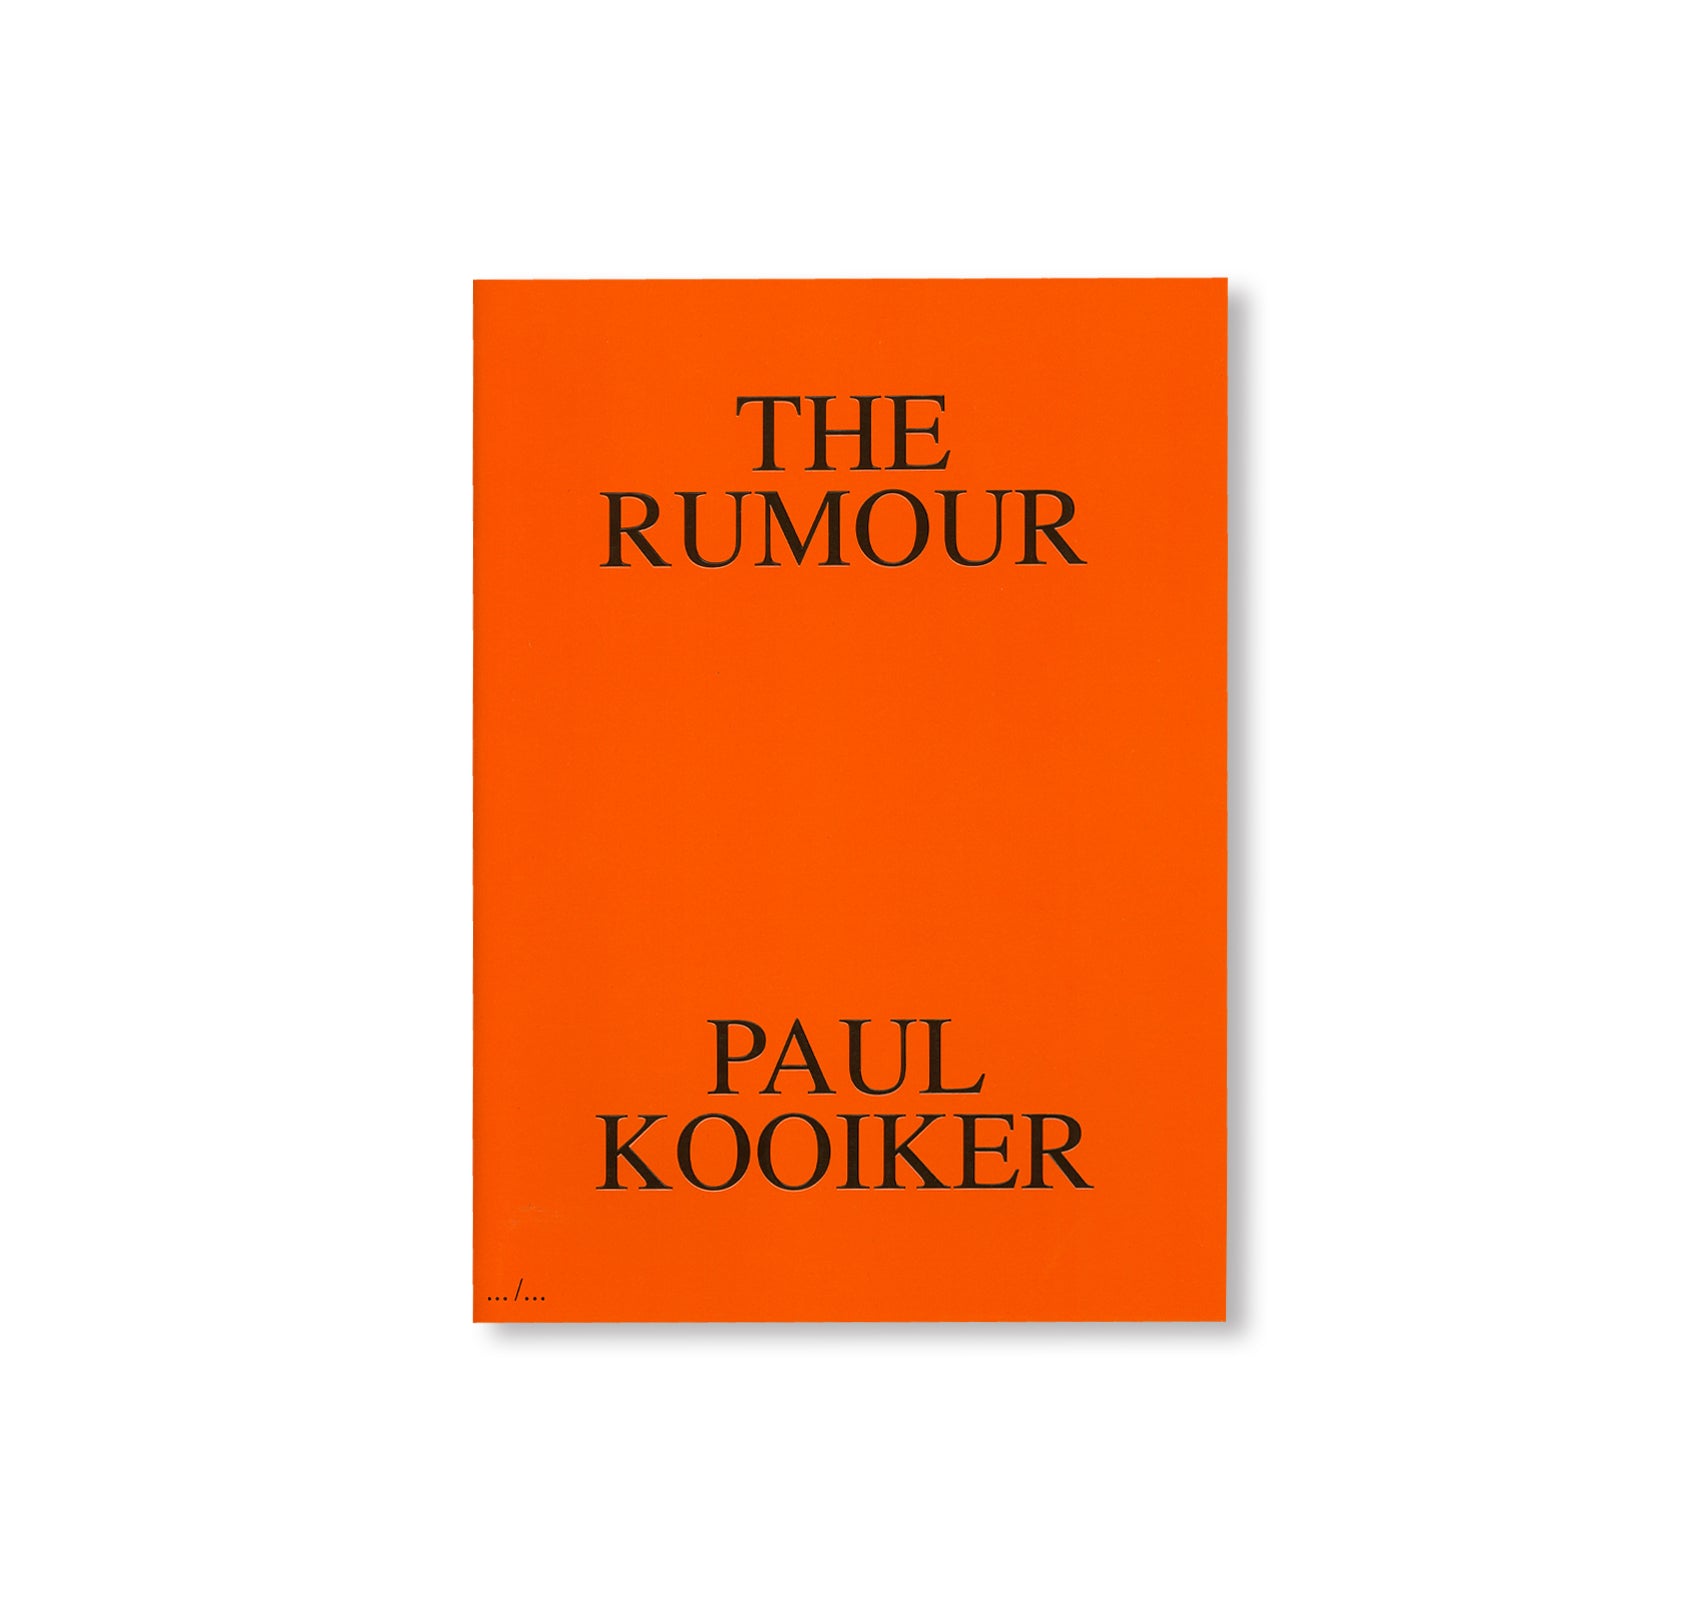 THE RUMOUR by Paul Kooiker [SIGNED]